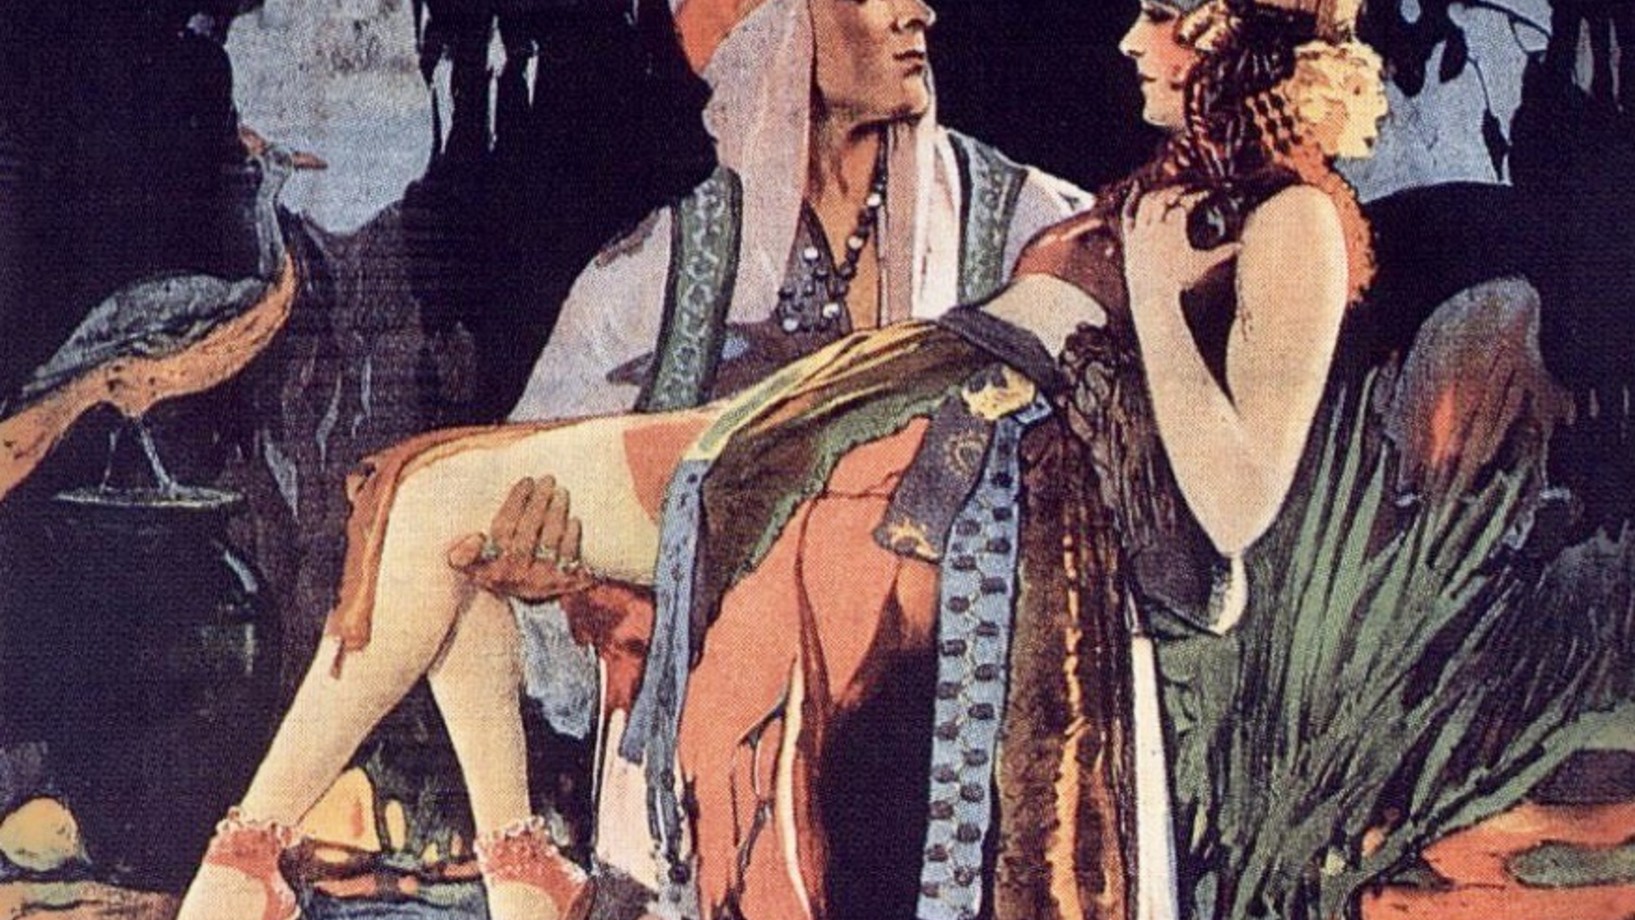 Rudolph Valentino, Vilma Bánky: Ausschnitt aus dem Filmplakat „The Son of the Sheik“